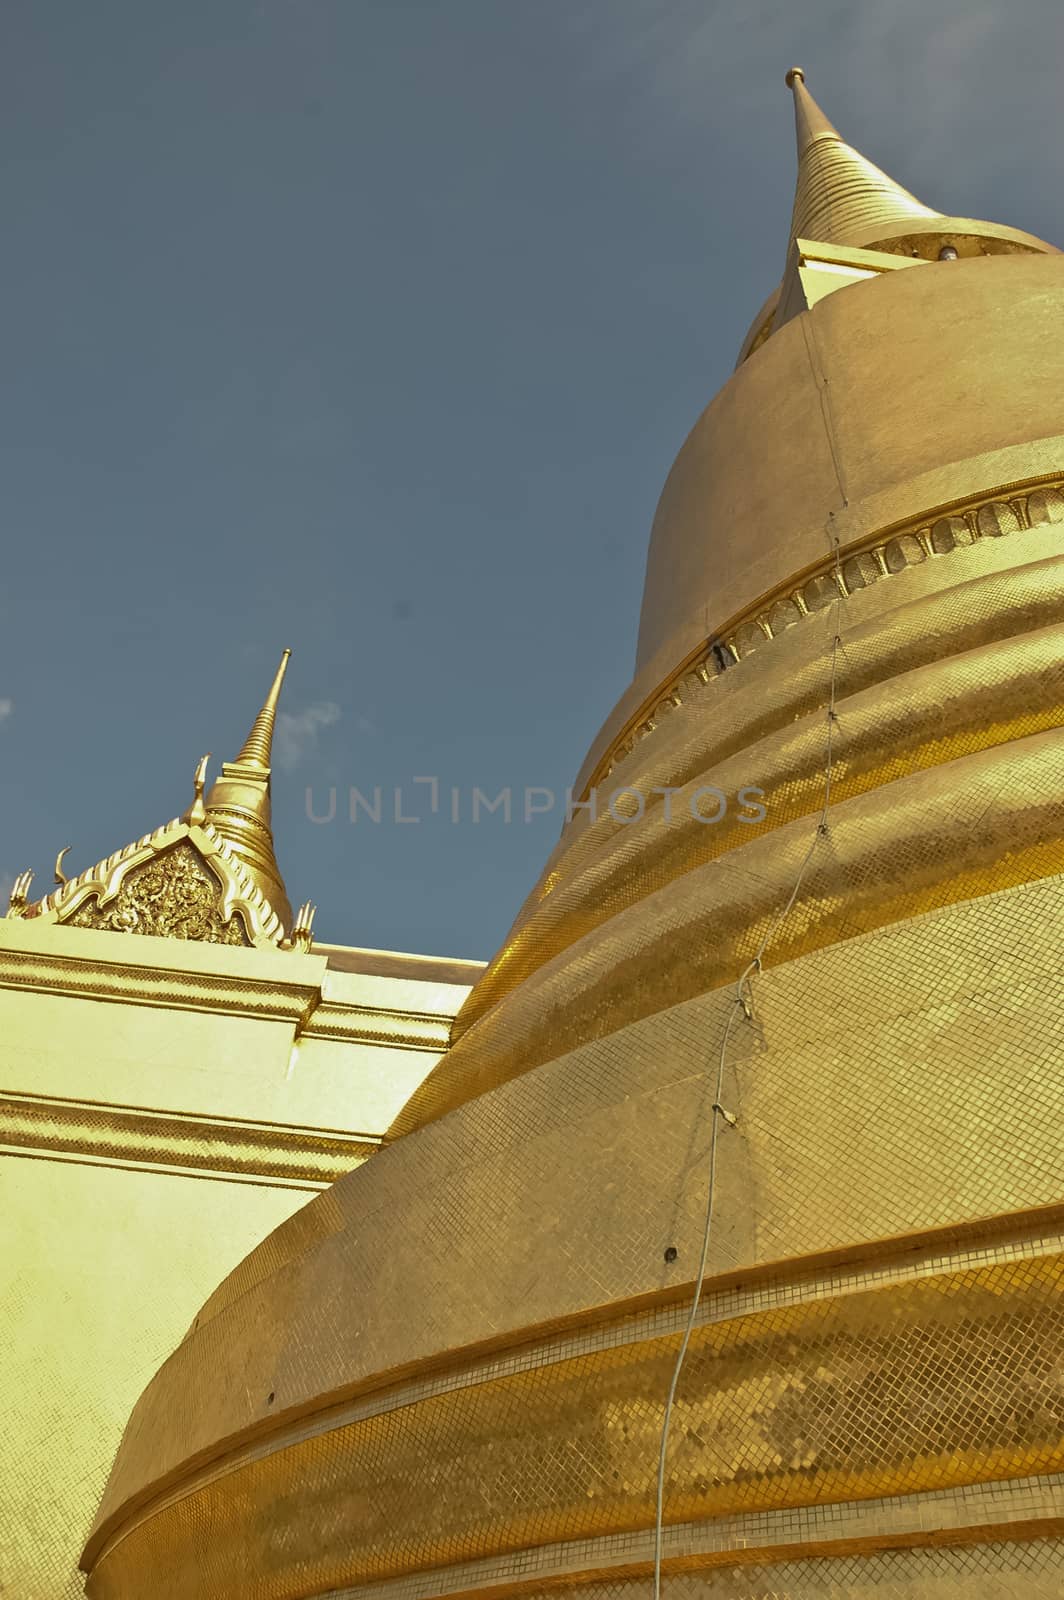 Golden stupa and blue sky in Bangkok Thailand by eyeofpaul